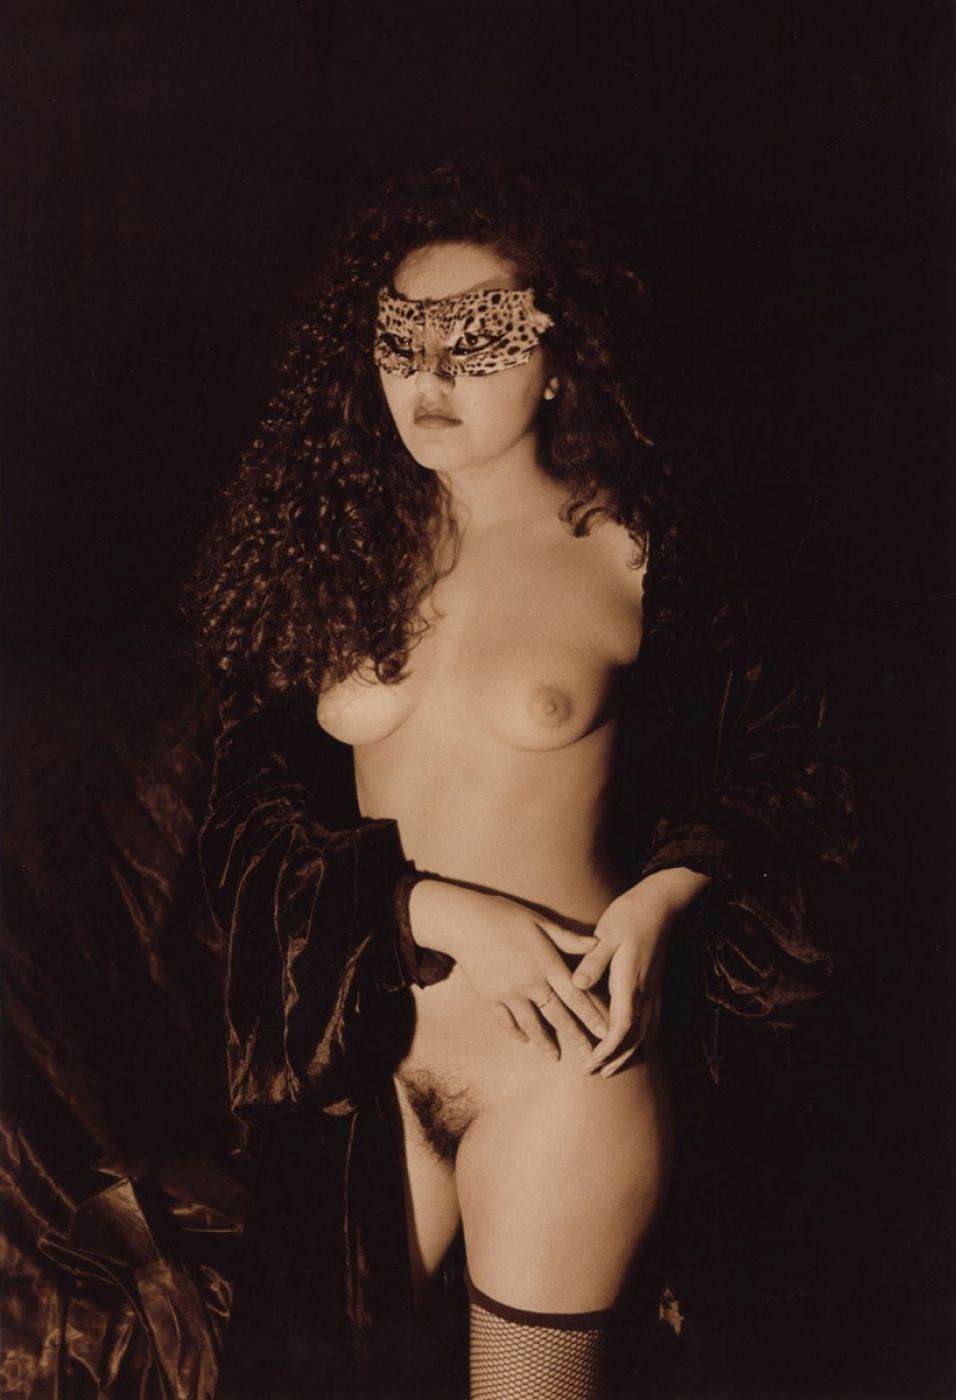 Irina Ionesco, “The Panther Mask”, 1981